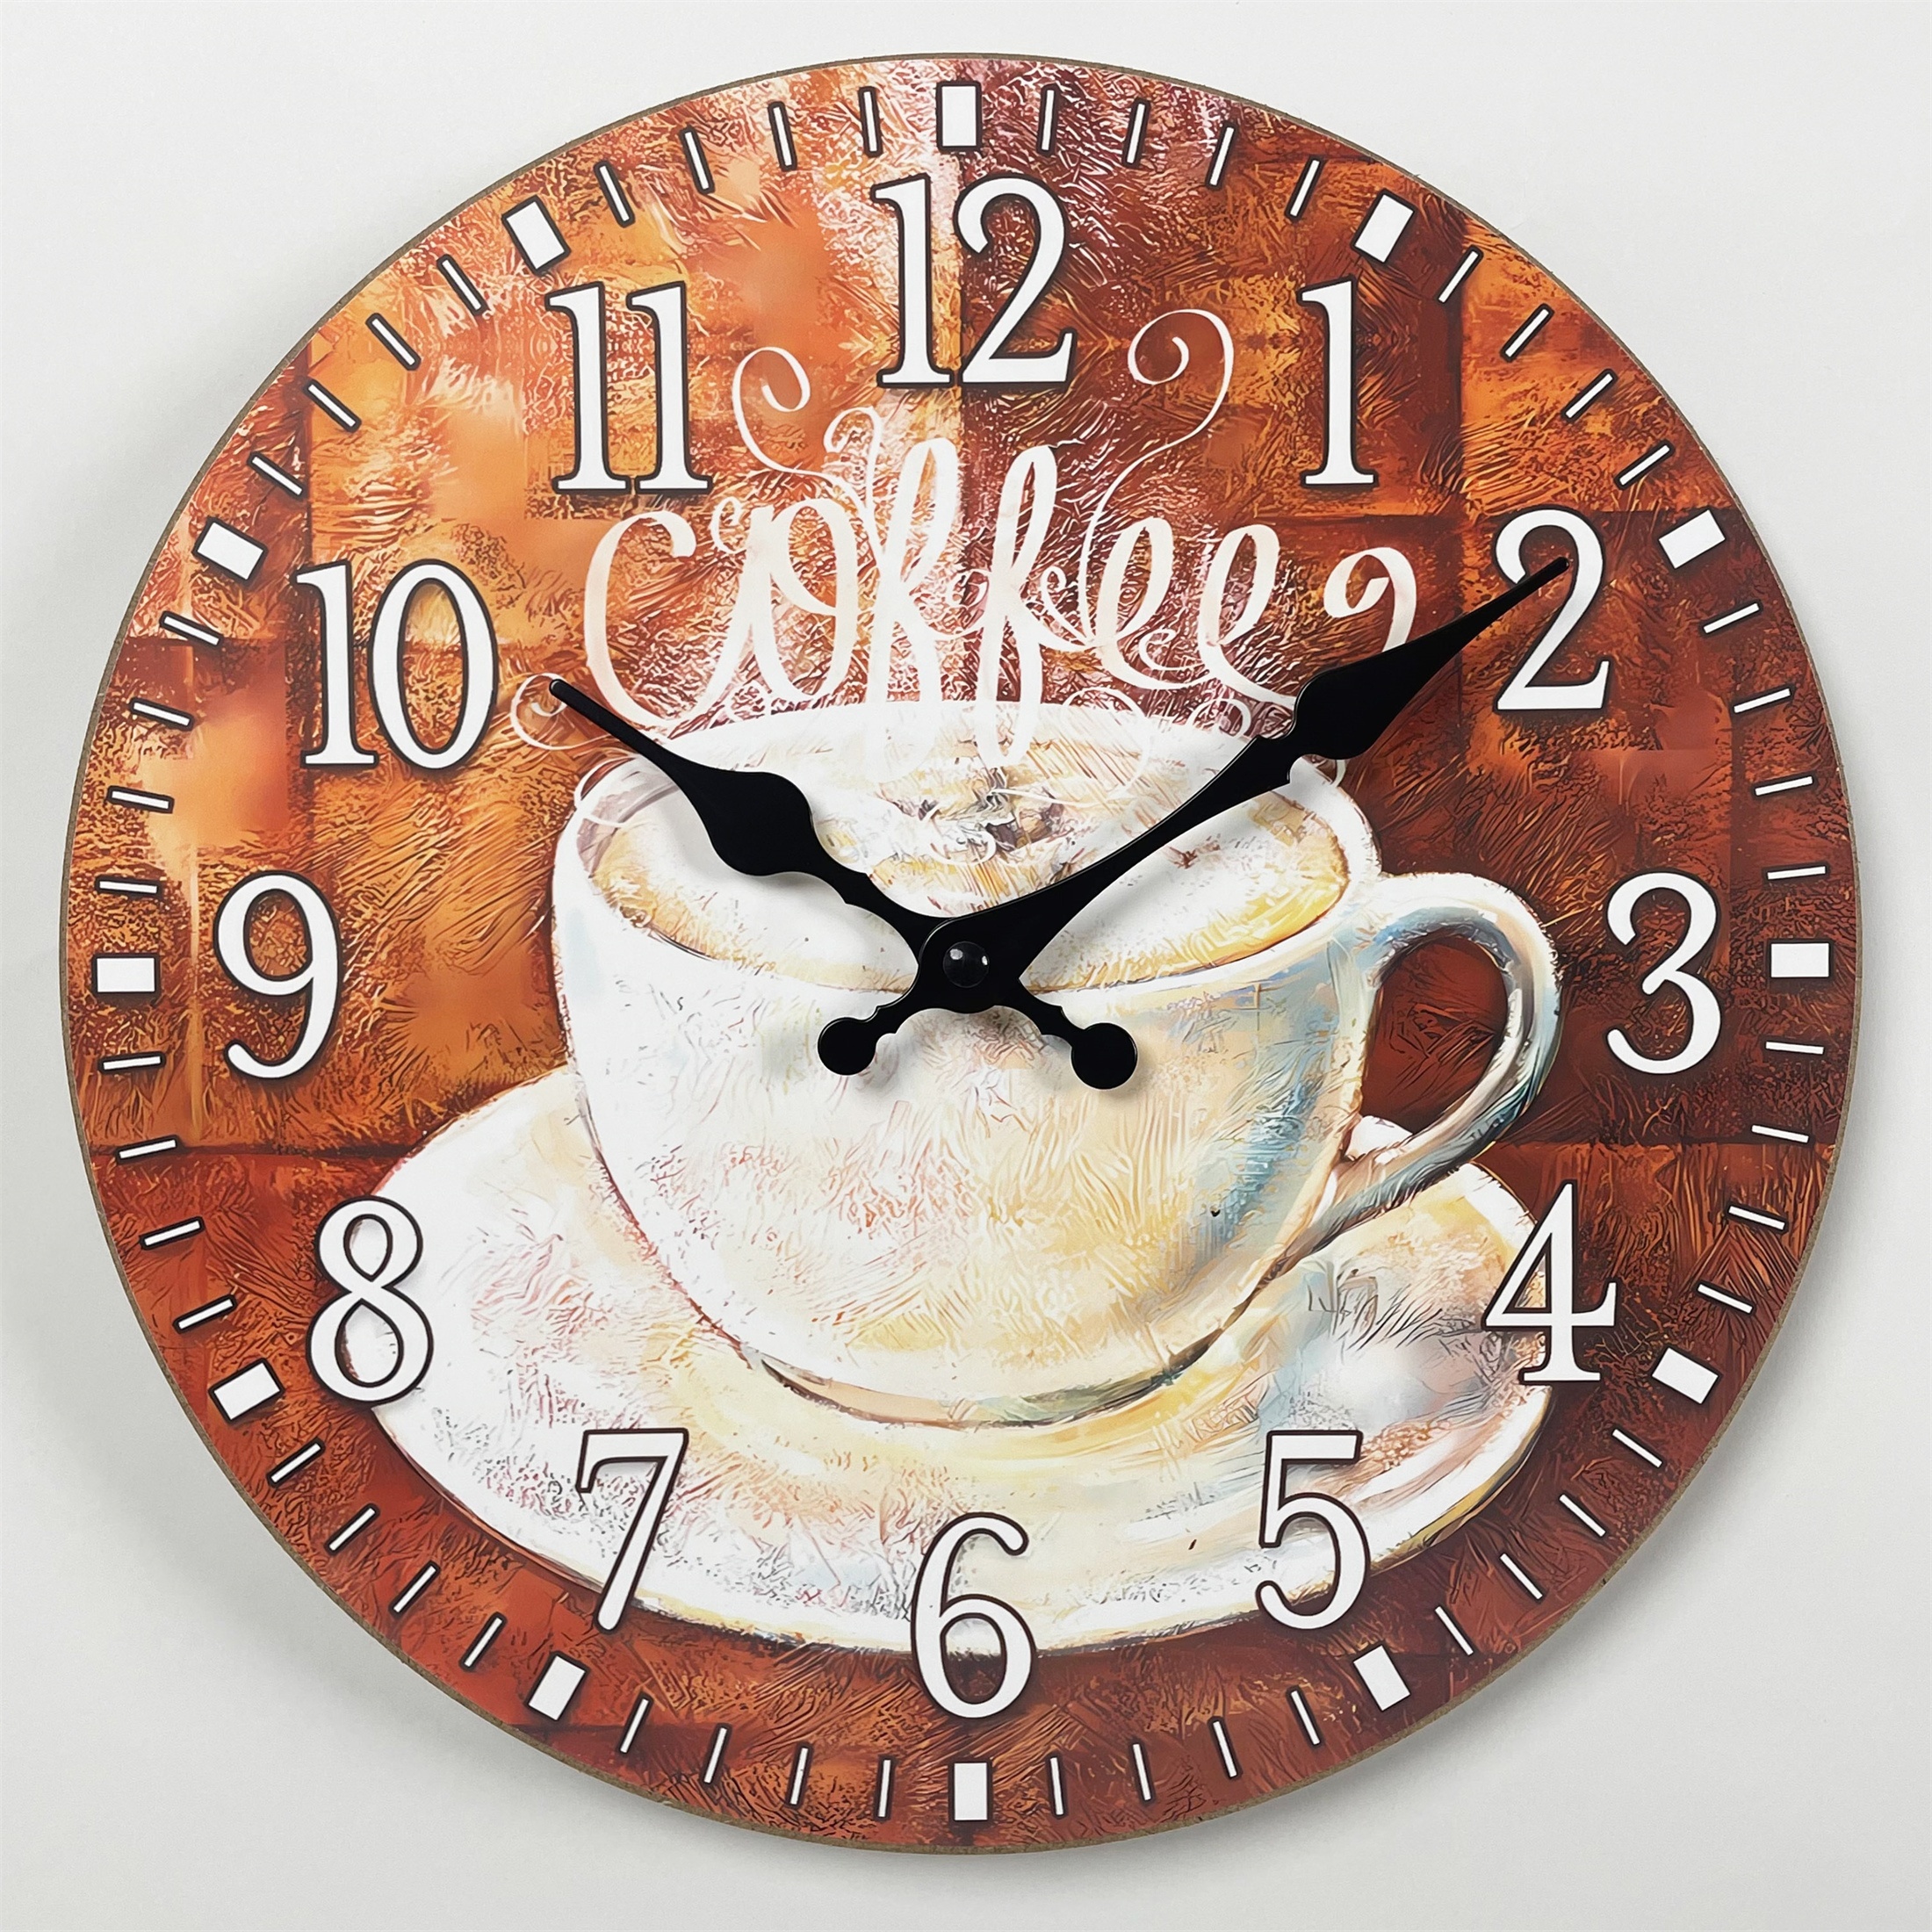 Reloj de pared de café, reloj de pared para cocina, cafetería, casa,  decoración artística, grano de café, Yin Yang, reloj de pared redondo de  cuarzo